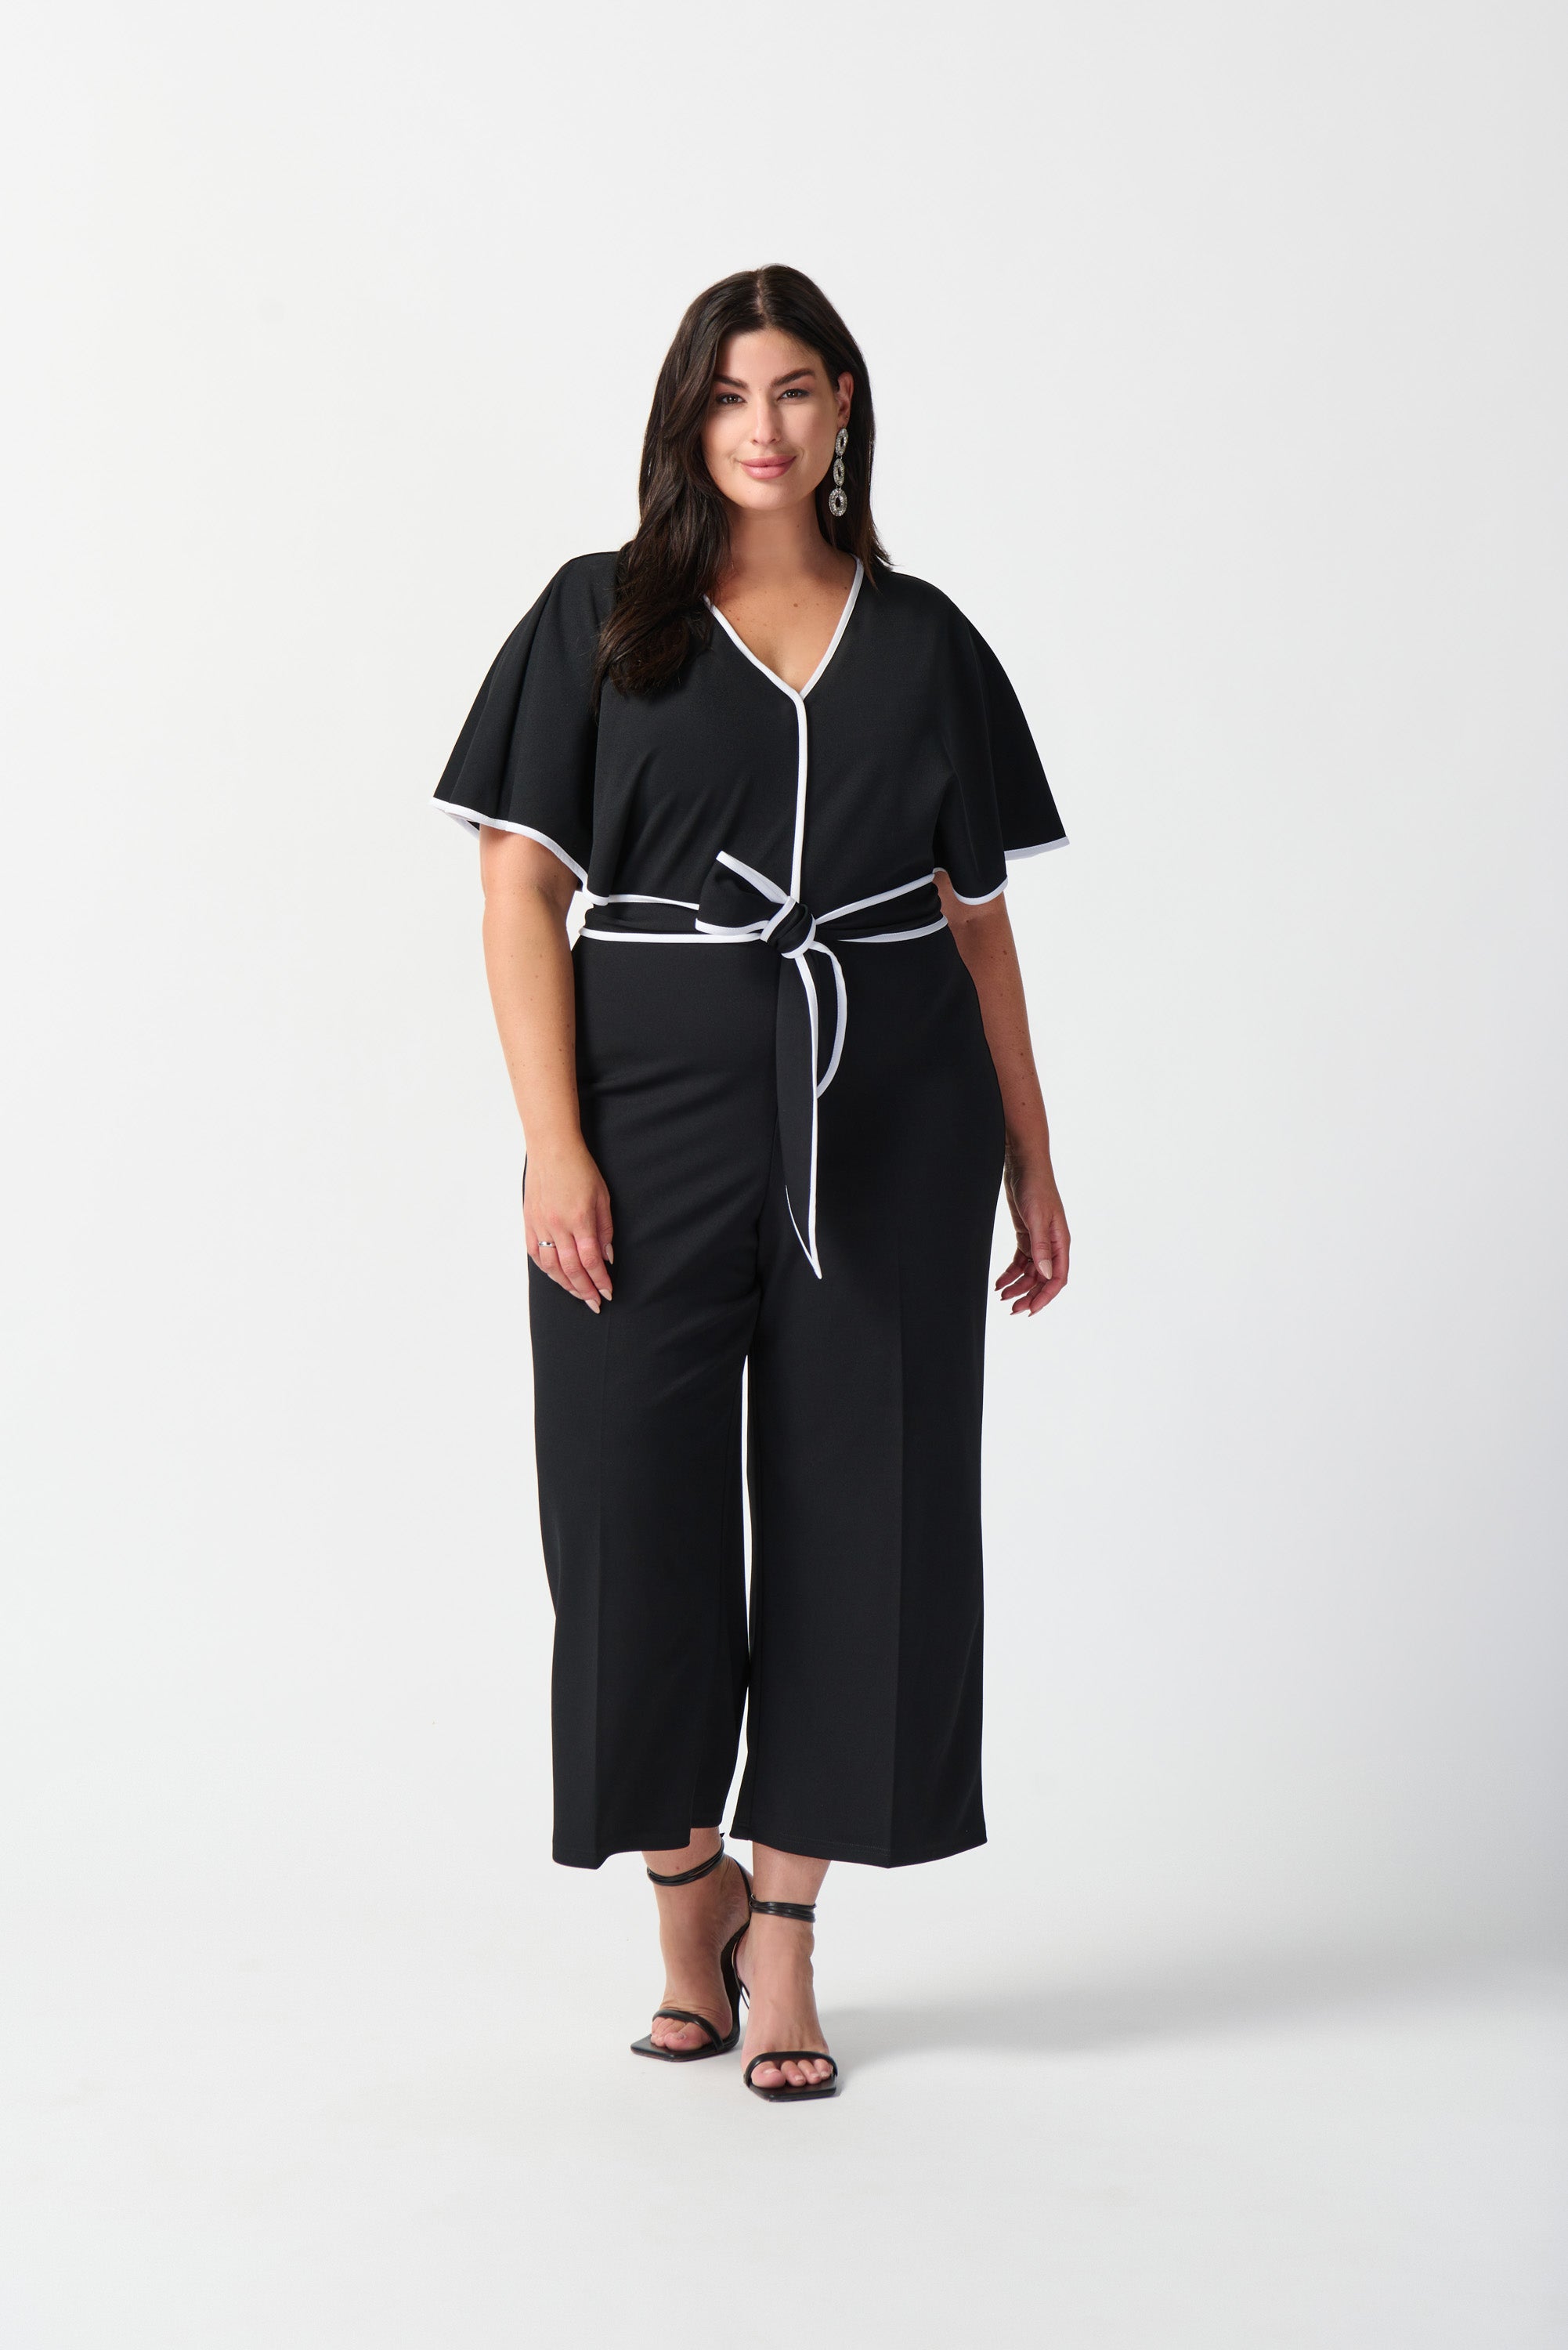 Kaia Plus Size Jumpsuit by Designer Joseph Ribkoff 242024